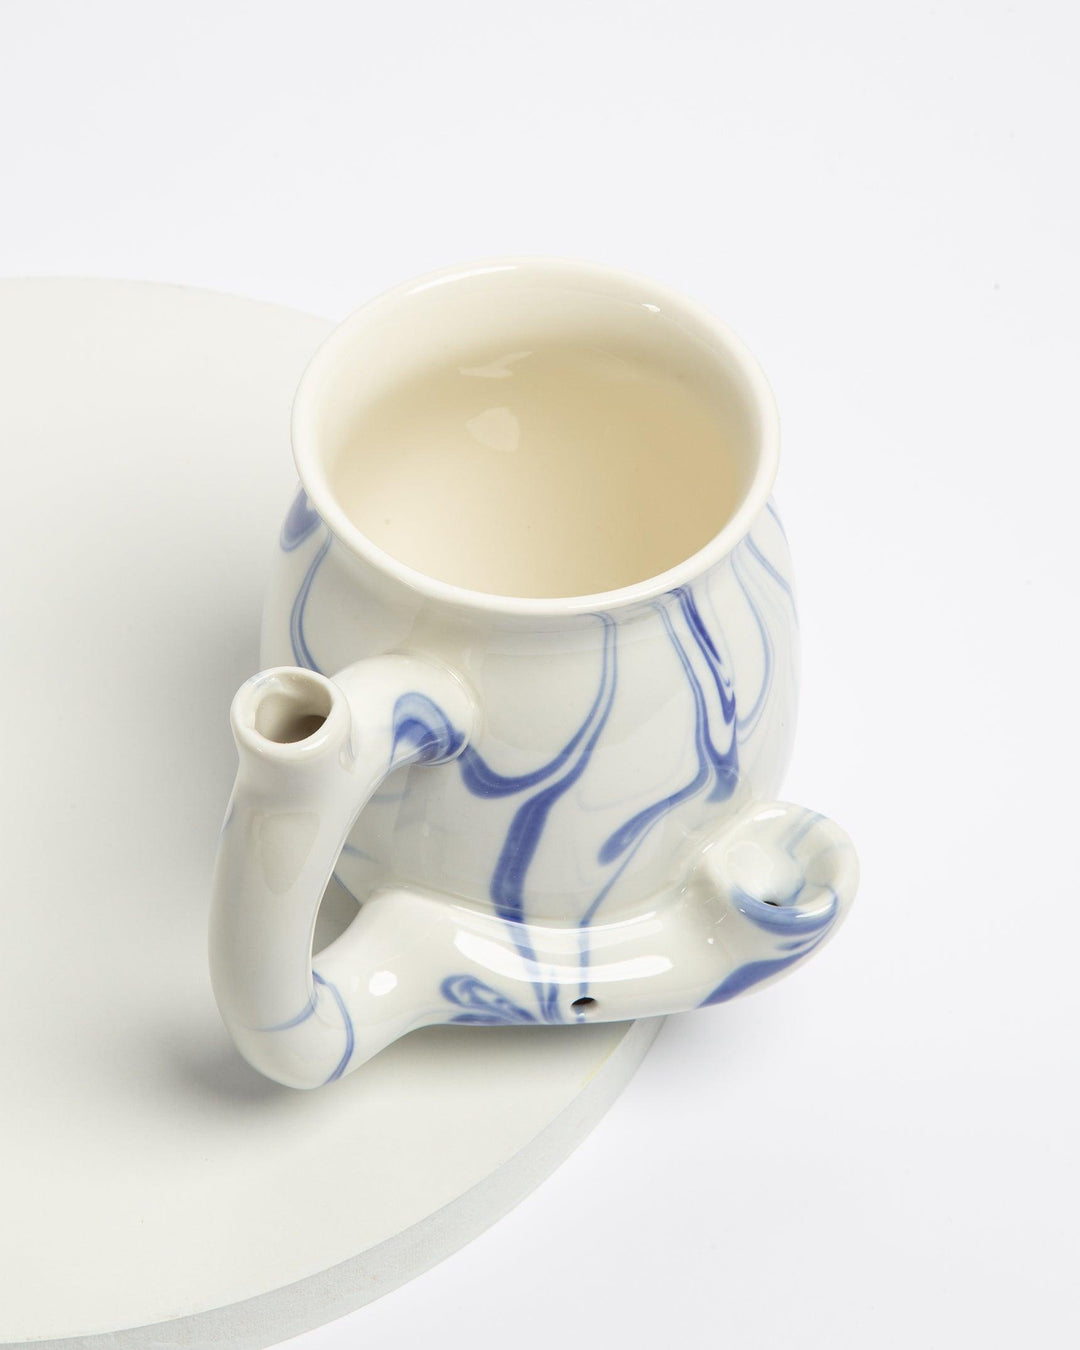 blue ceramic functional pipe mug in one